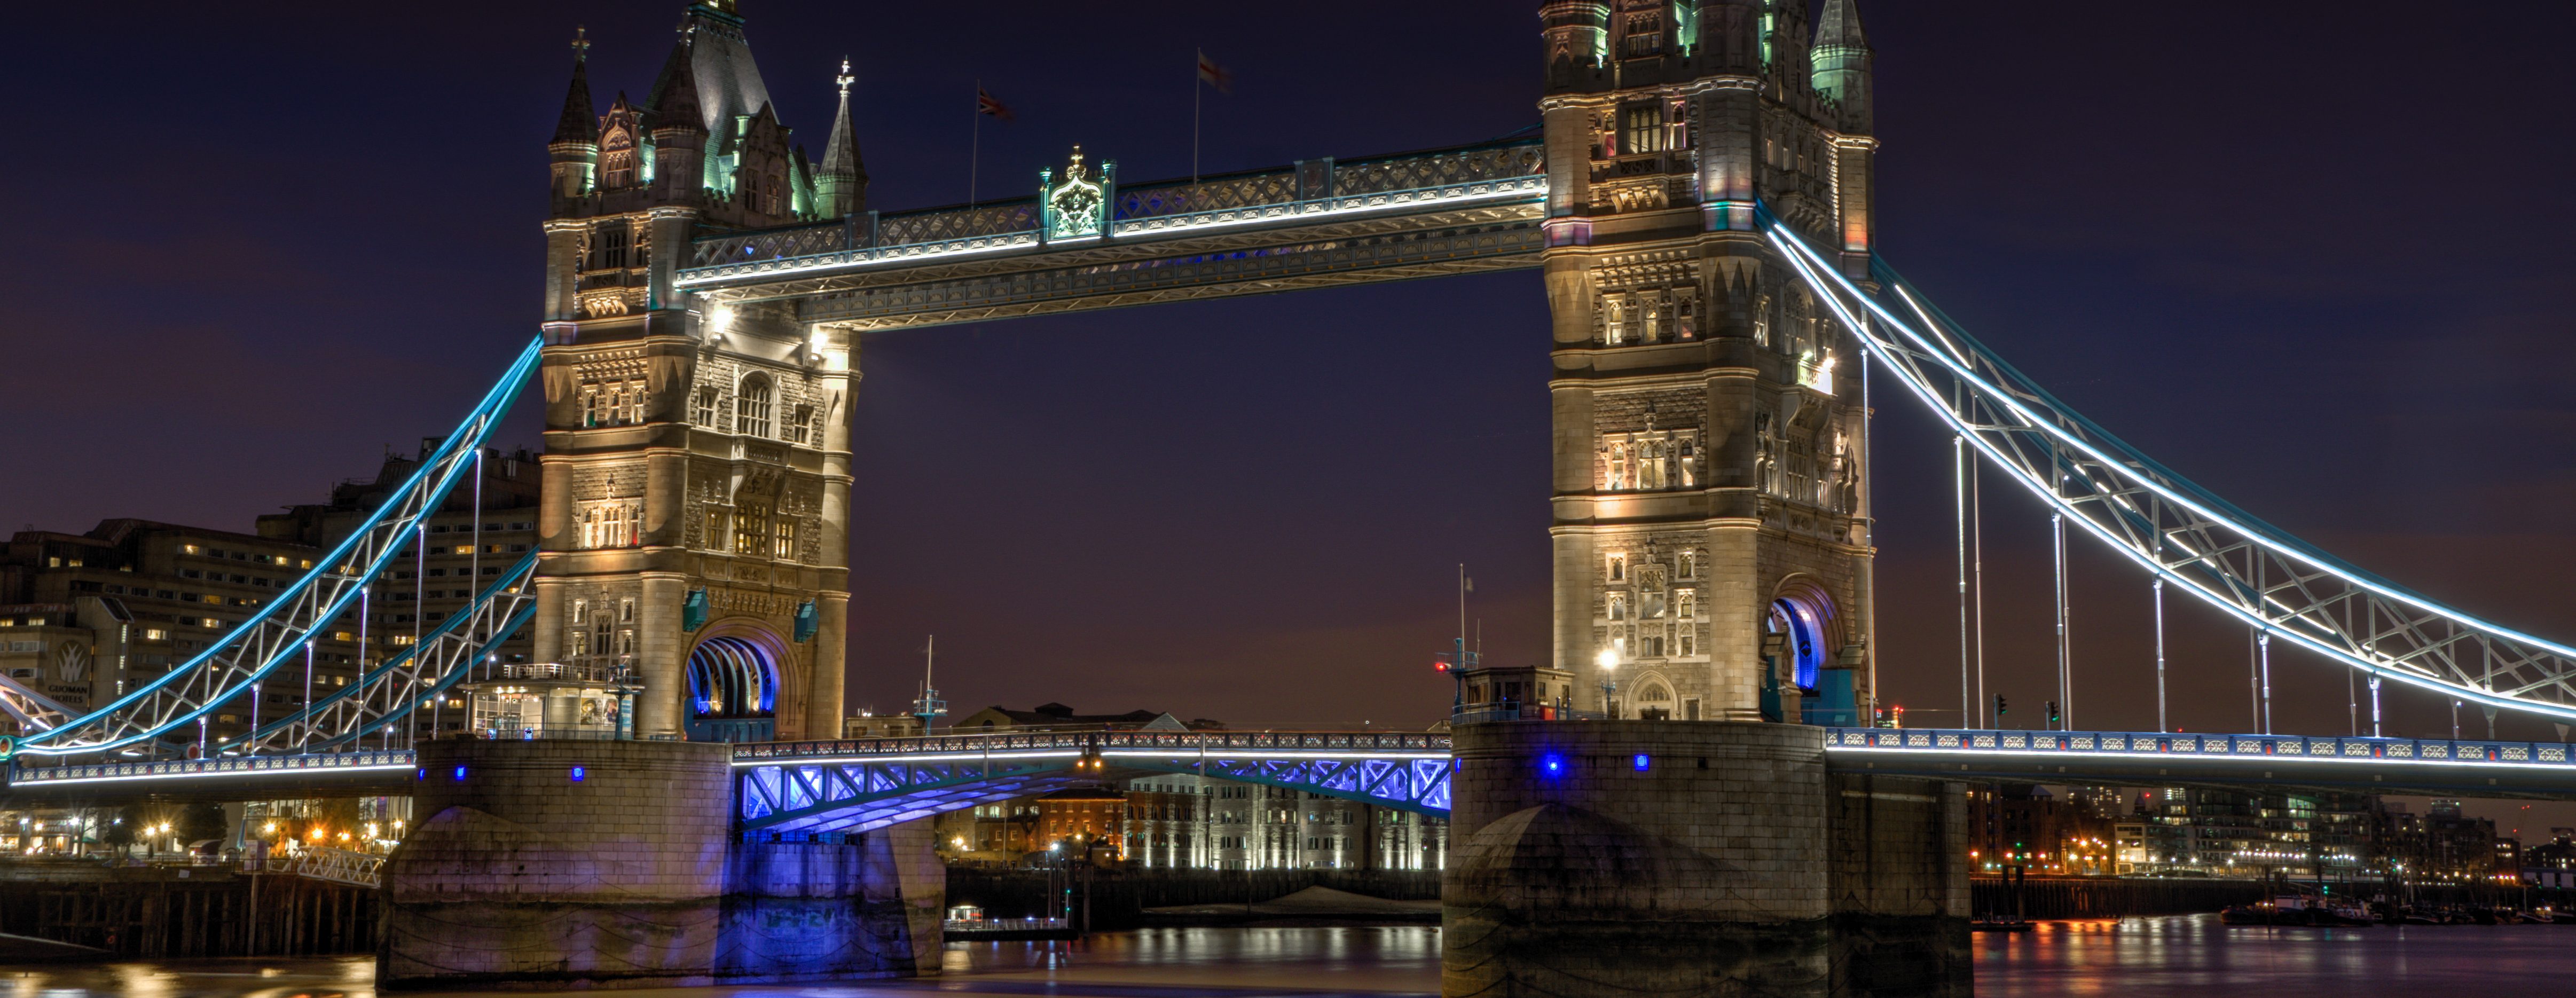 Use Chauffur Services London to visit the beautiful London Bridge.